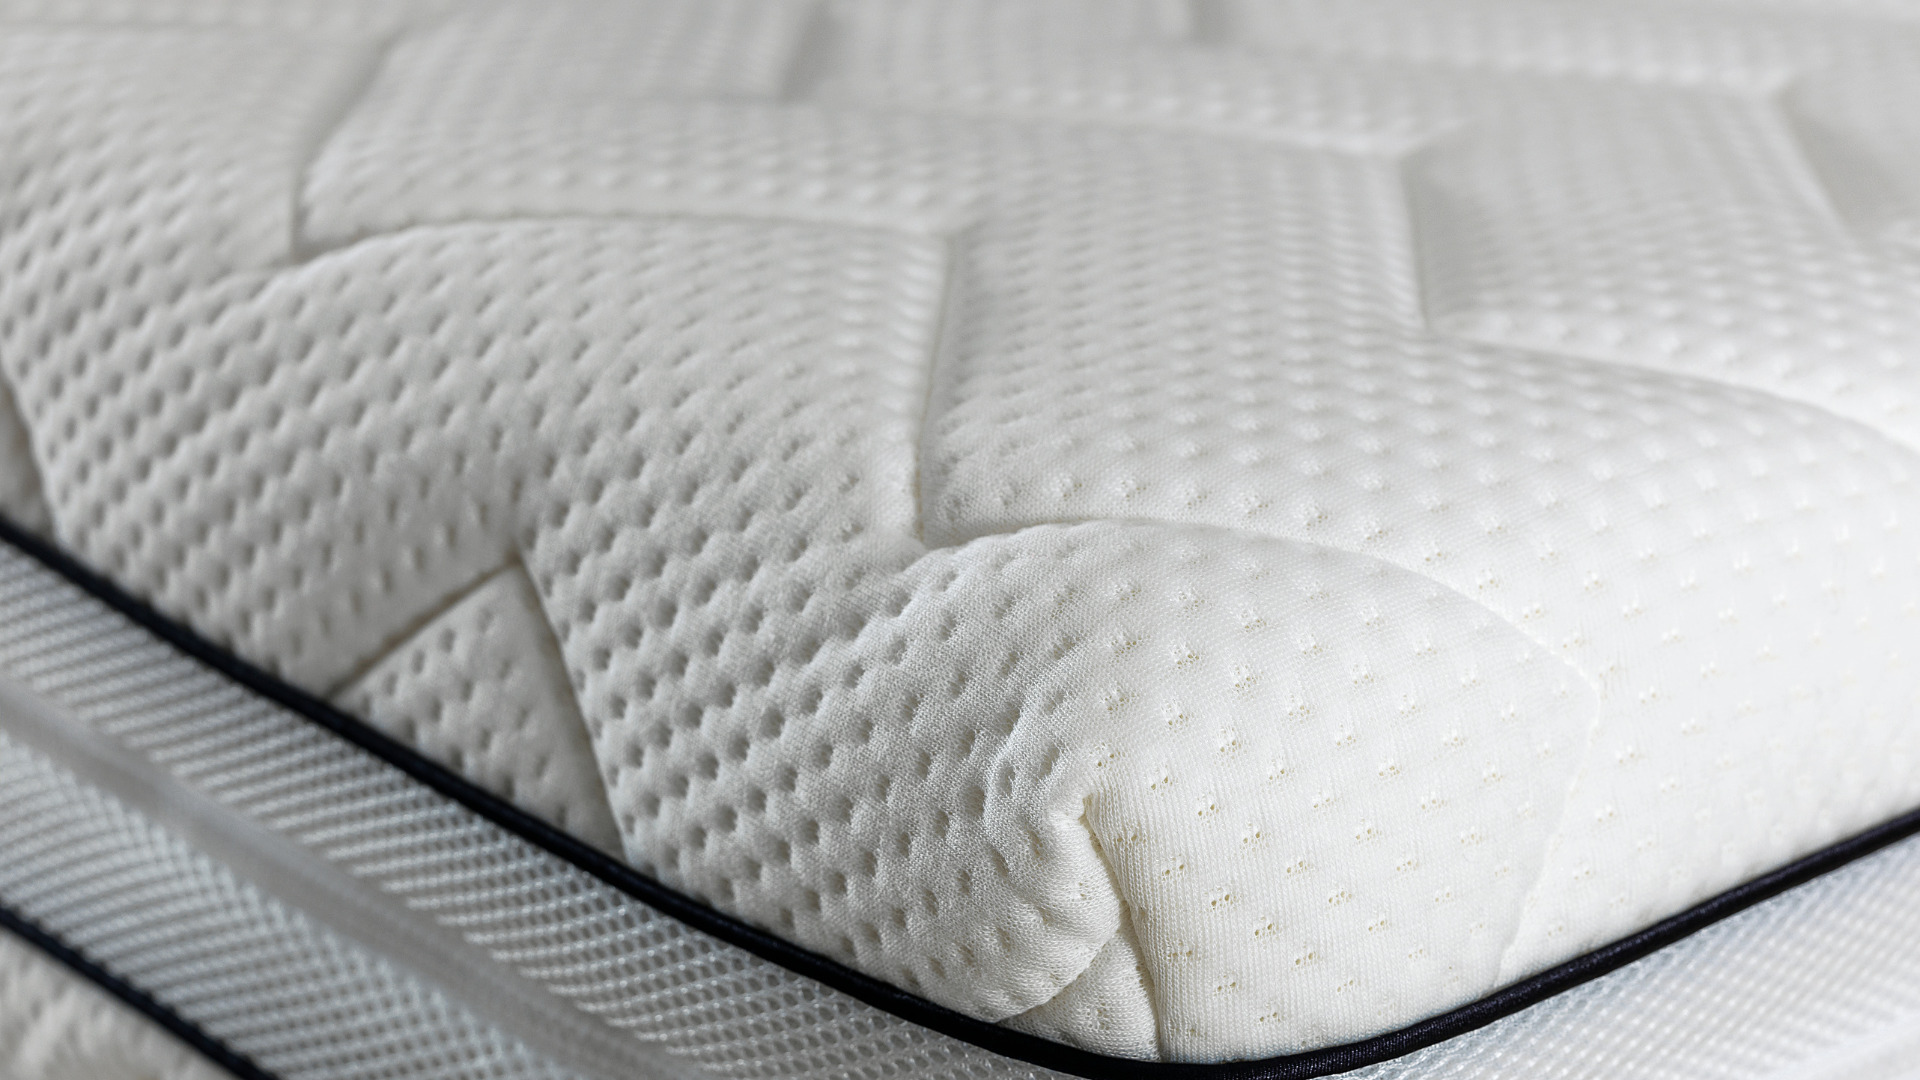 rv mattress pad prevents mold